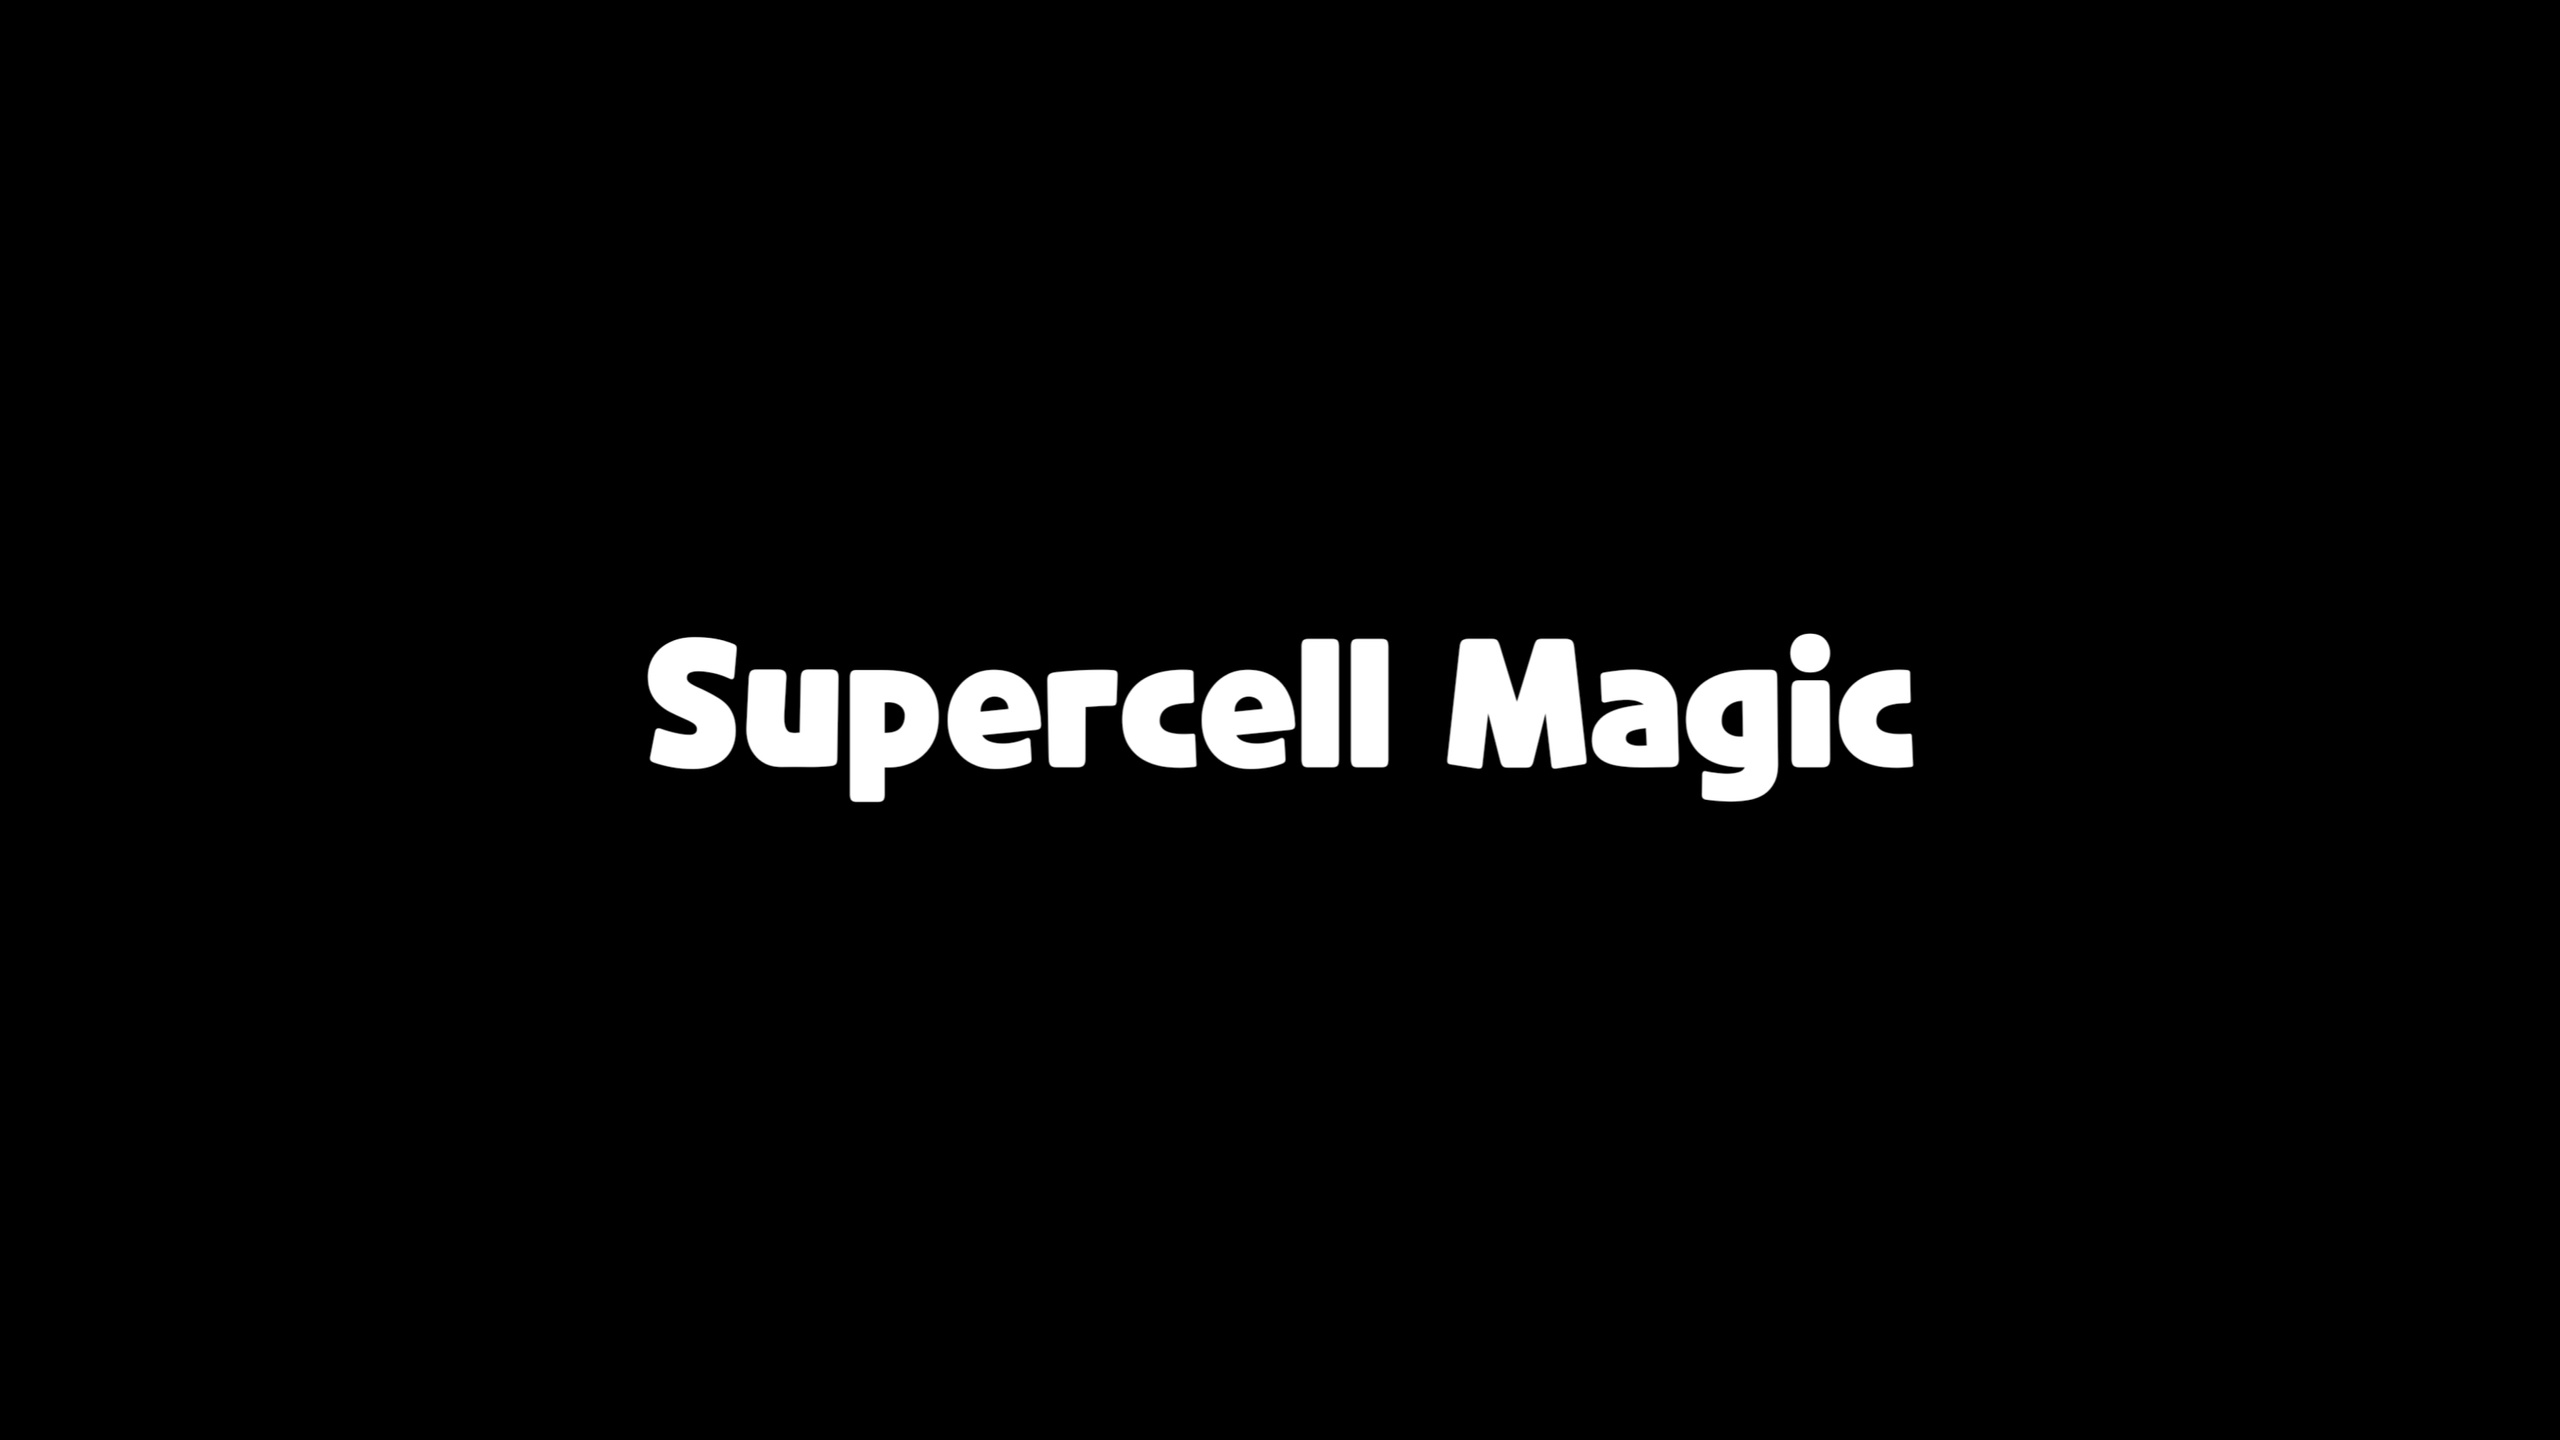 SUPERCELL MAGIC